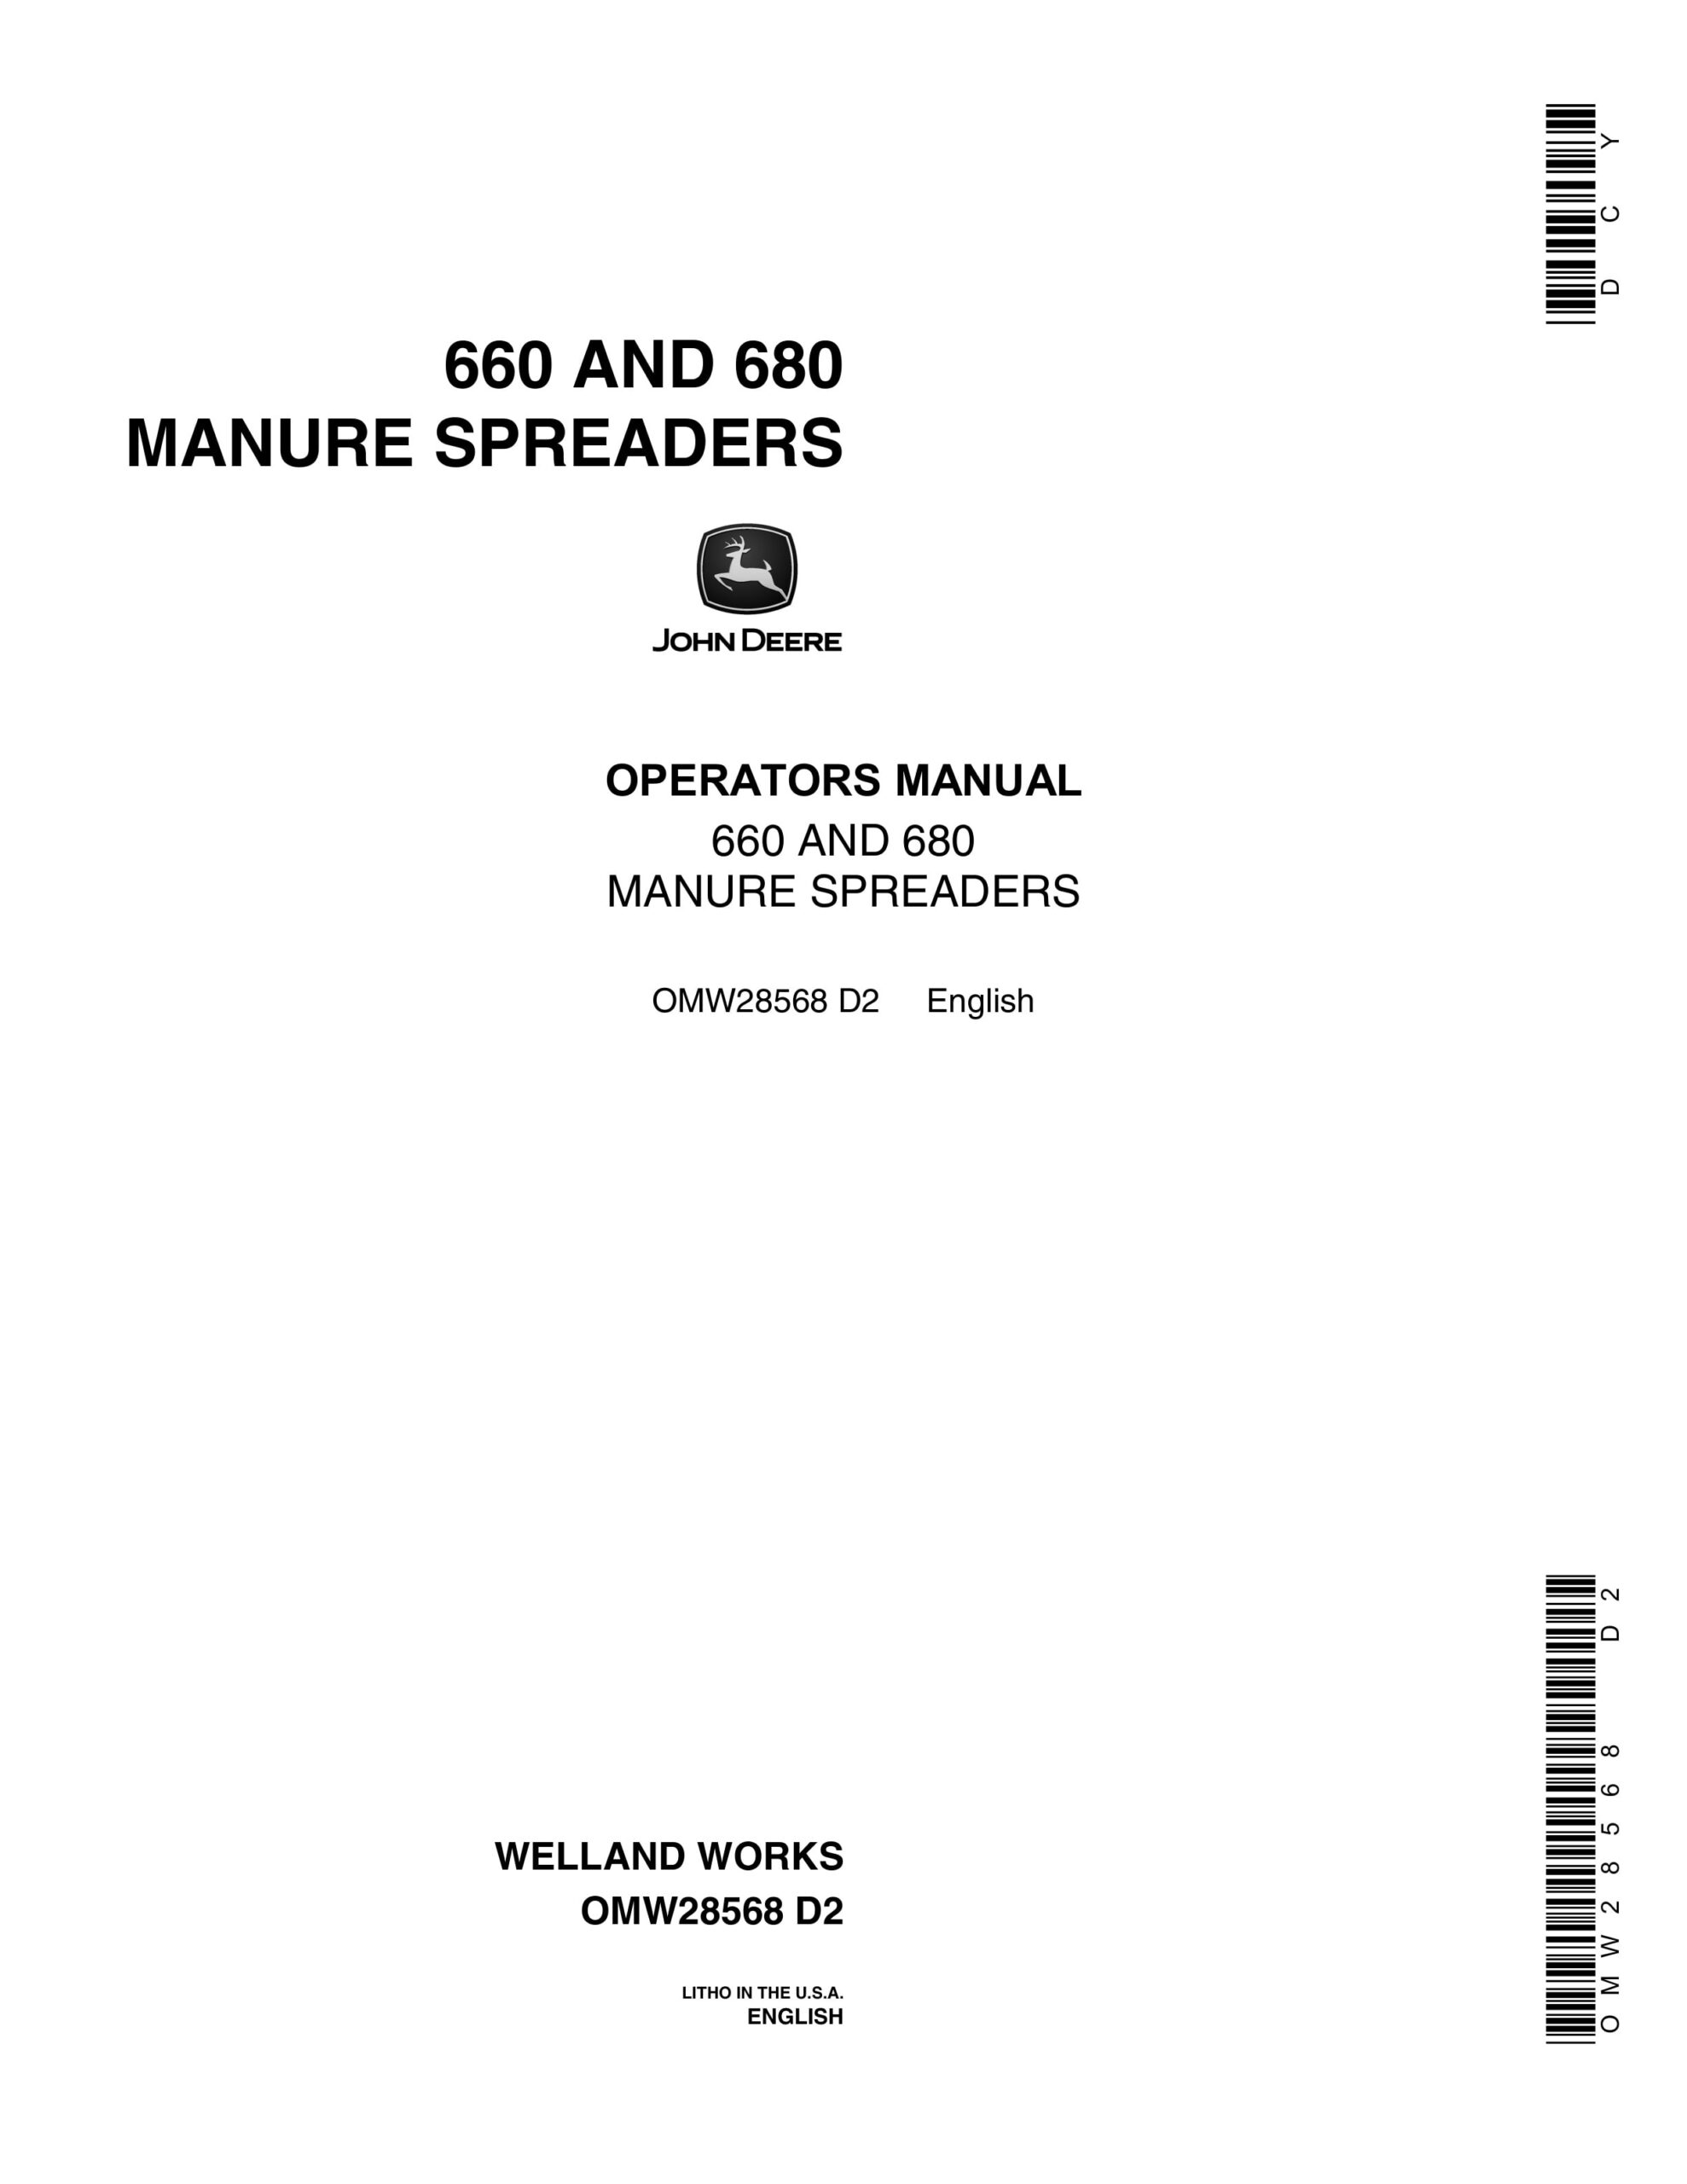 John Deere 660 AND 680 MANURE SPREADER Operator Manual OMW28568-1